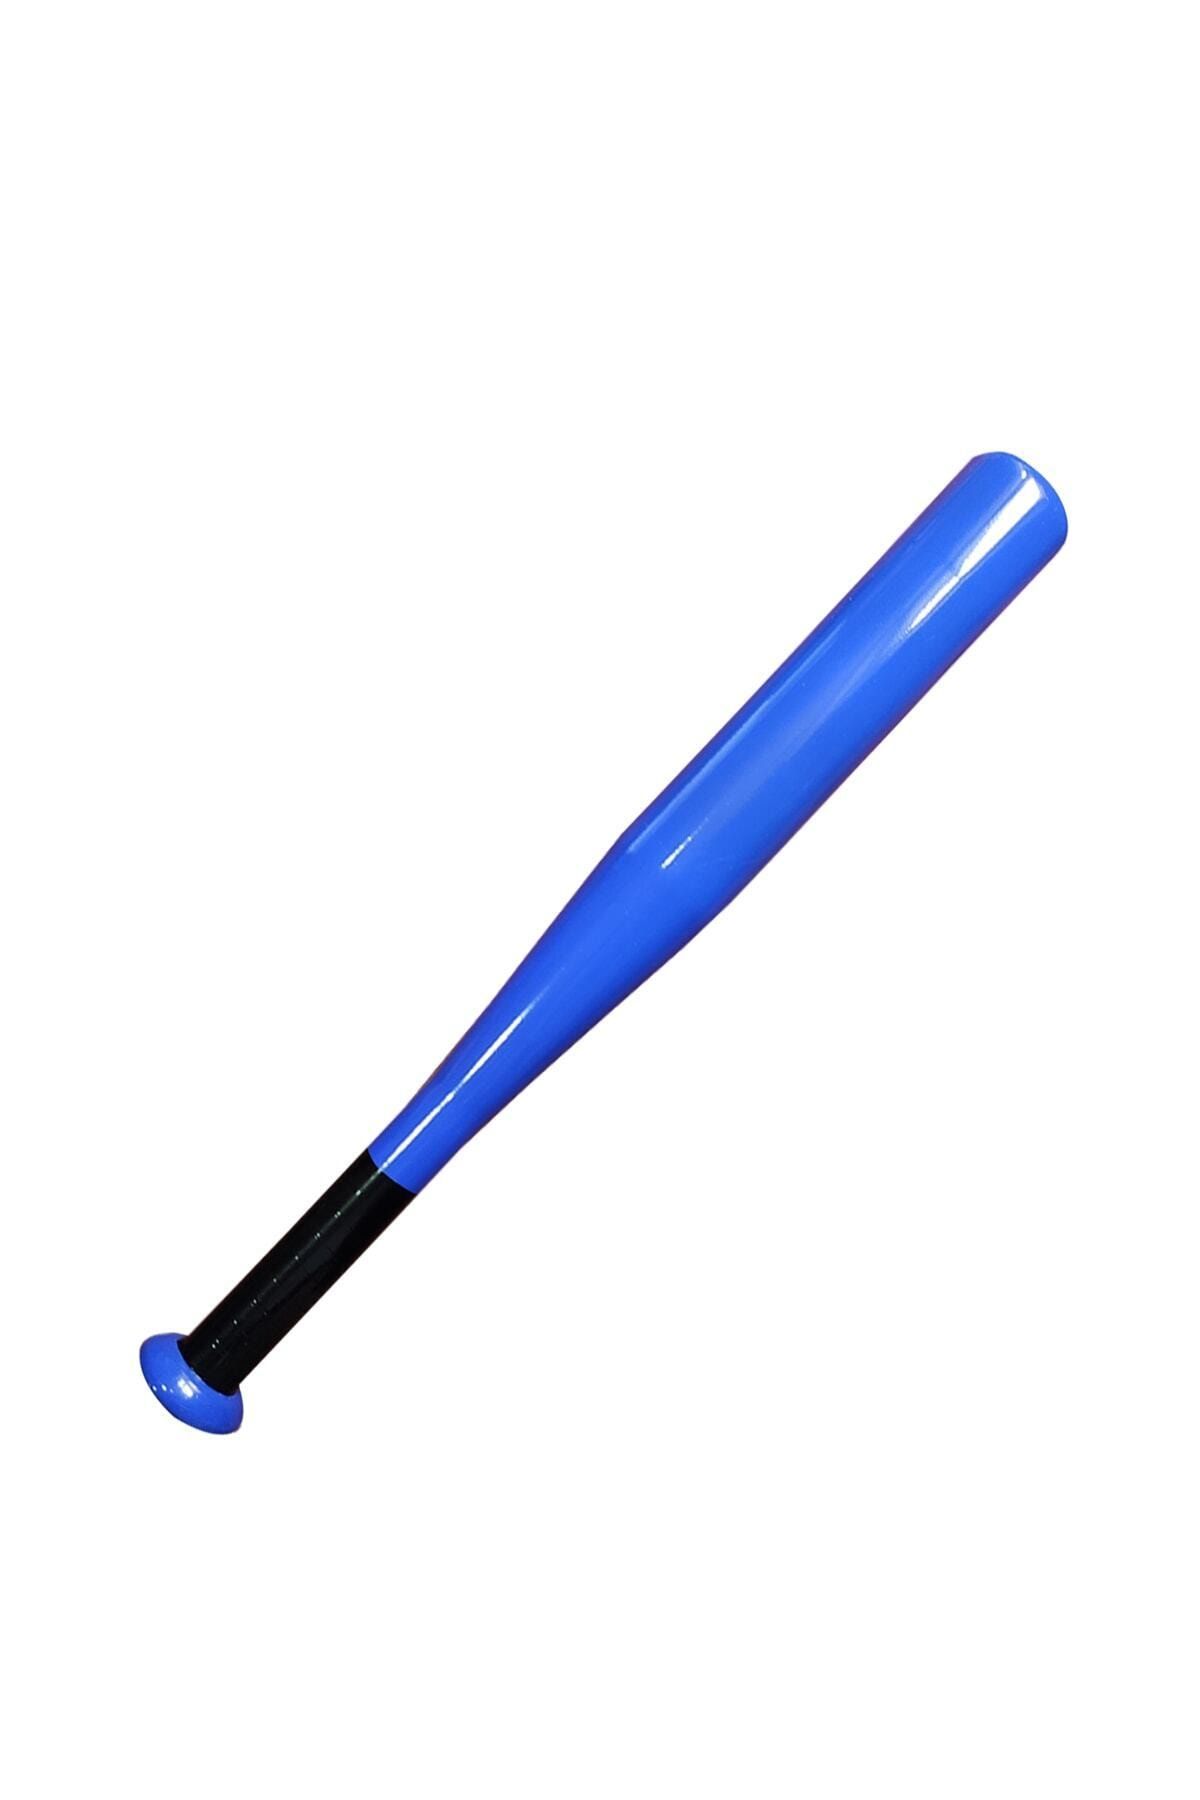 Avessa 64 Cm Metal Beyzbol Sopası Mavi Sd-710m